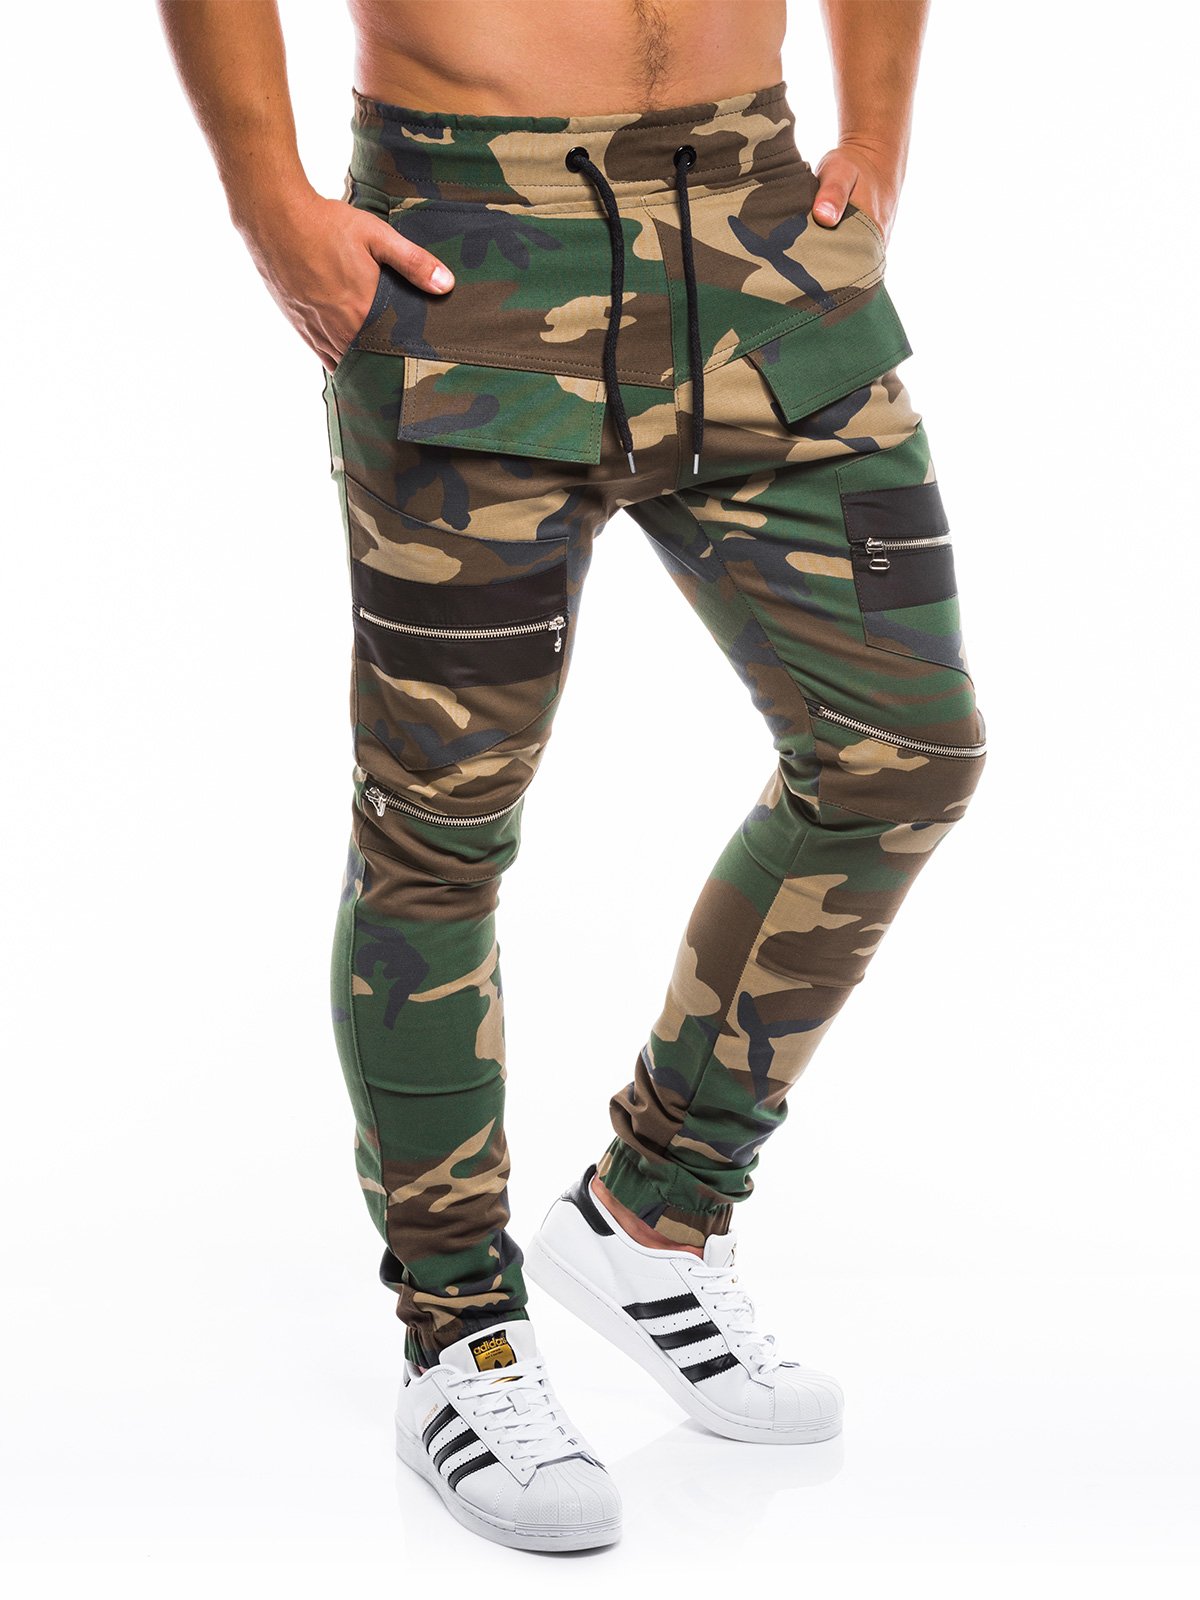 Men's pants joggers P708 - green/camo | MODONE wholesale - Clothing For Men